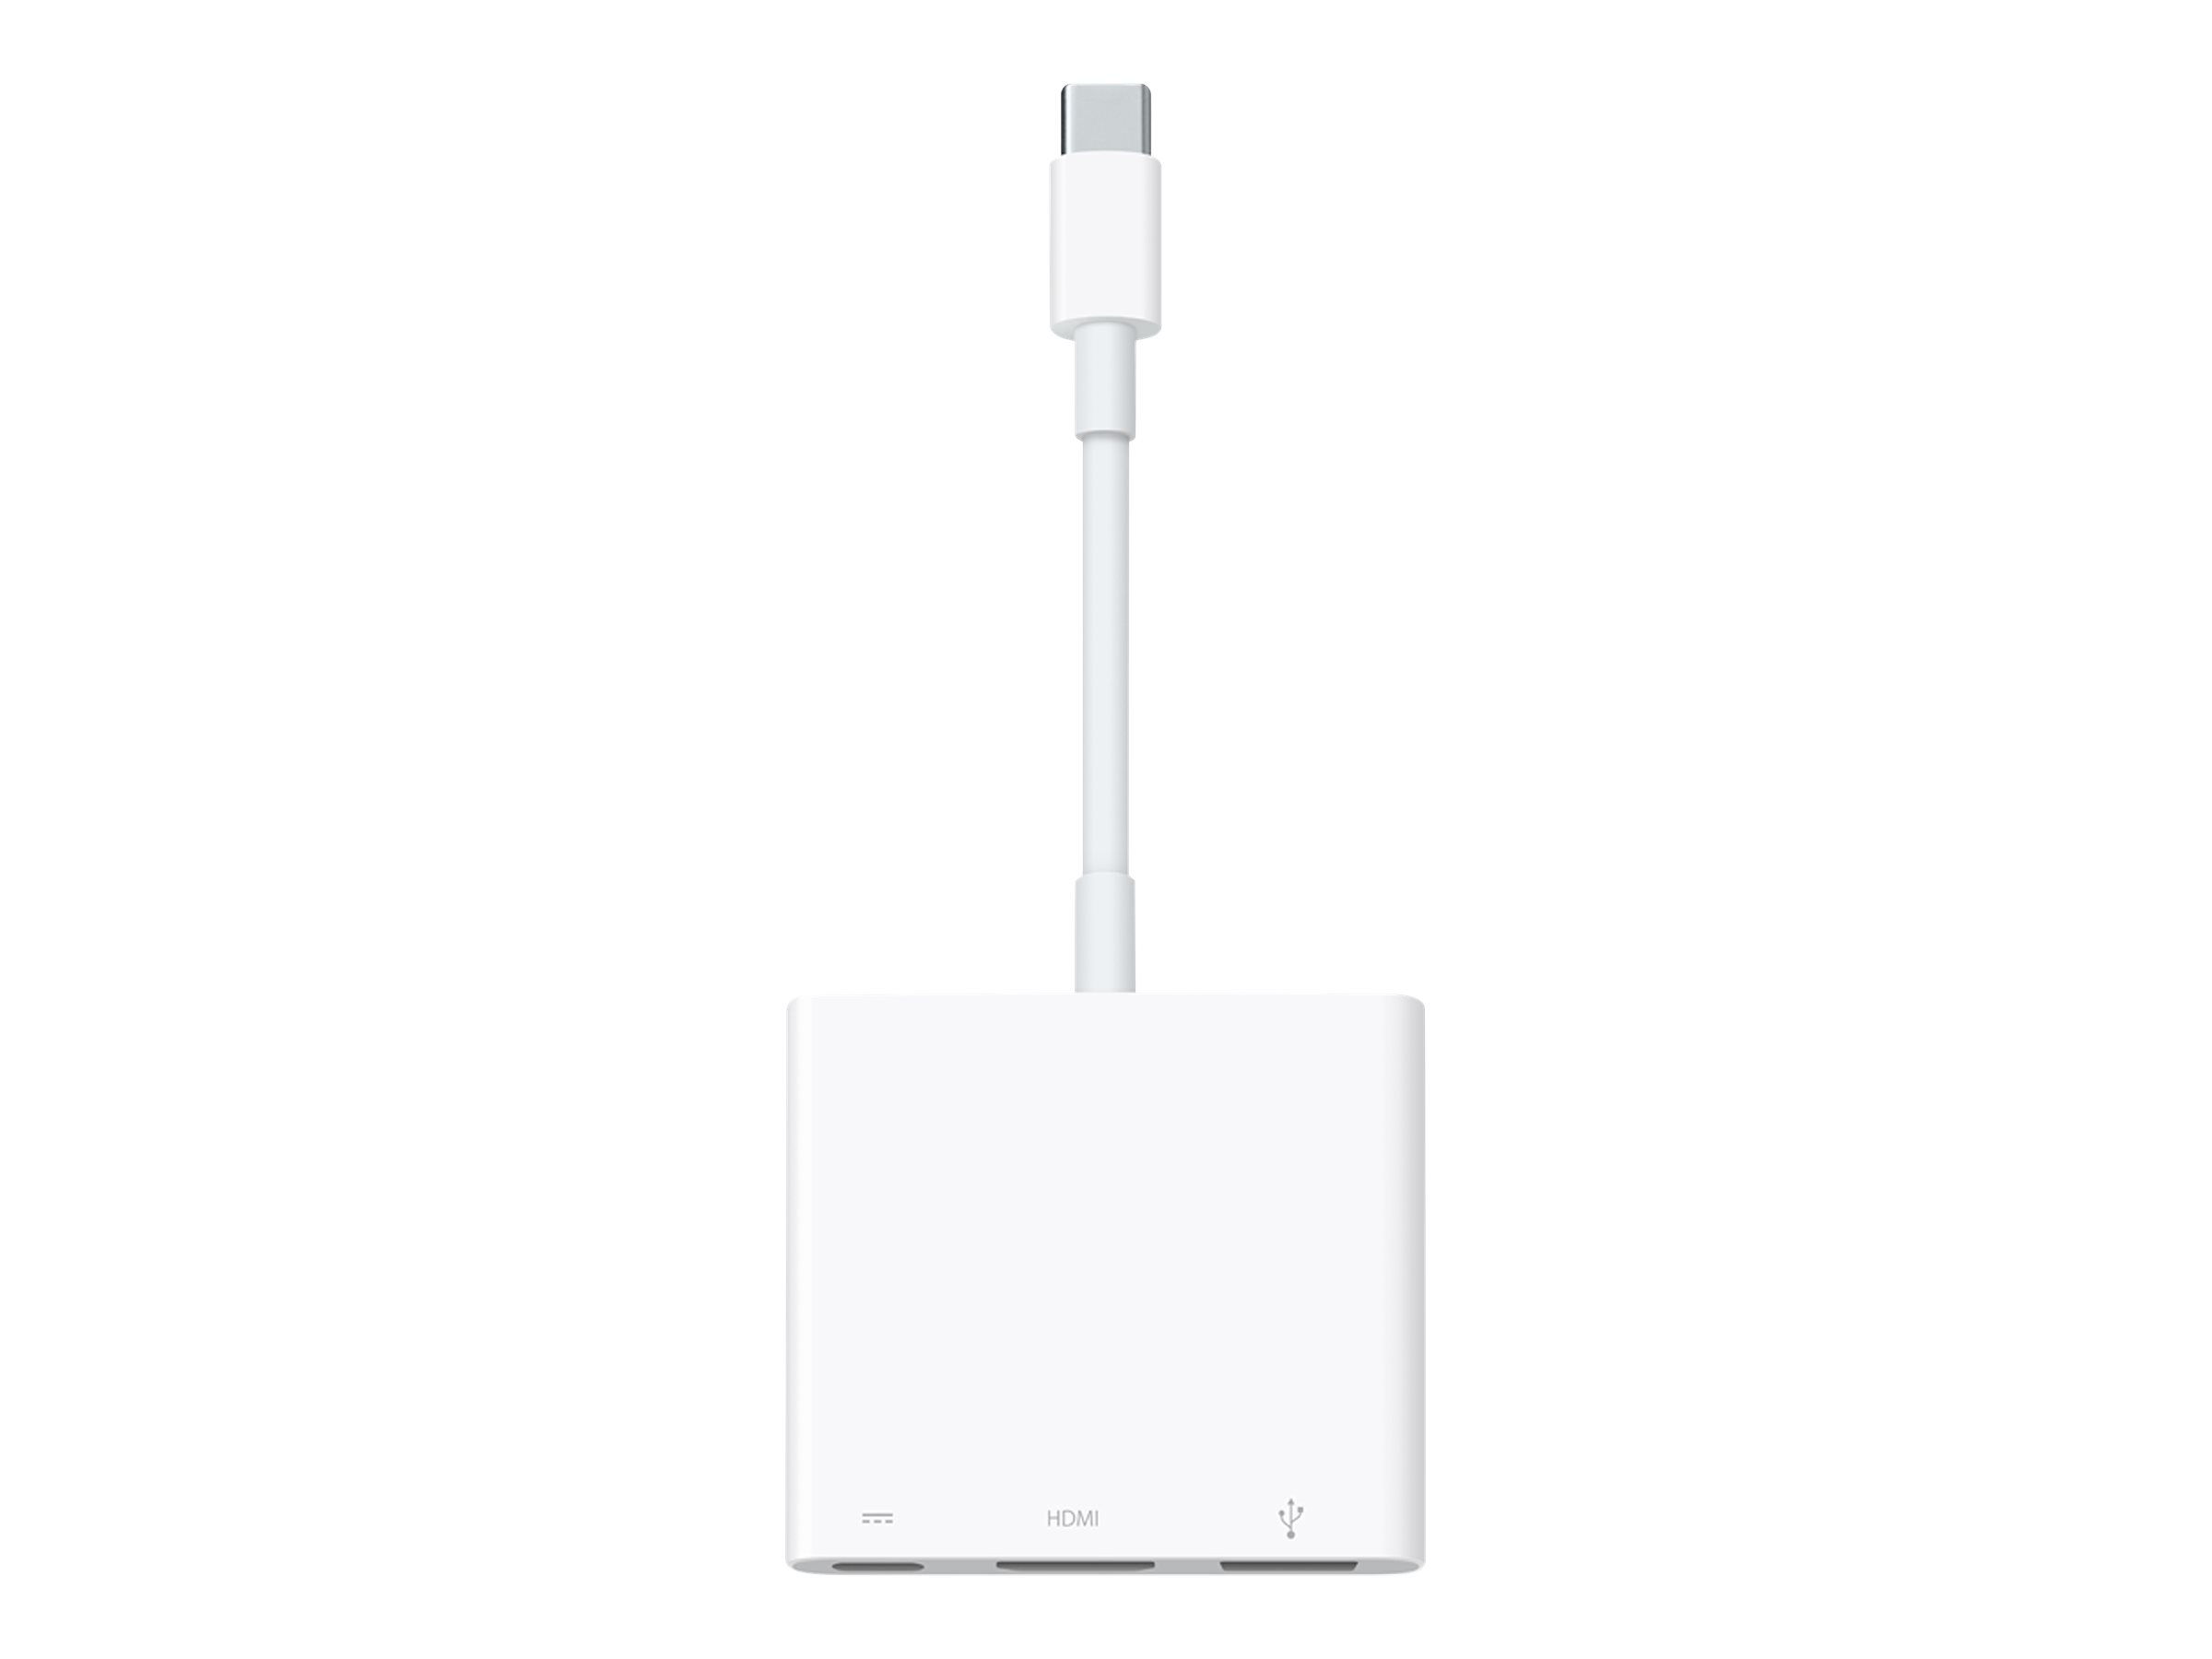 Apple Digital AV Multiport Adapter - Videoadapter - 24 pin USB-C mnnlich zu USB, HDMI, USB-C (nur Spannung) weiblich - 4K Unter